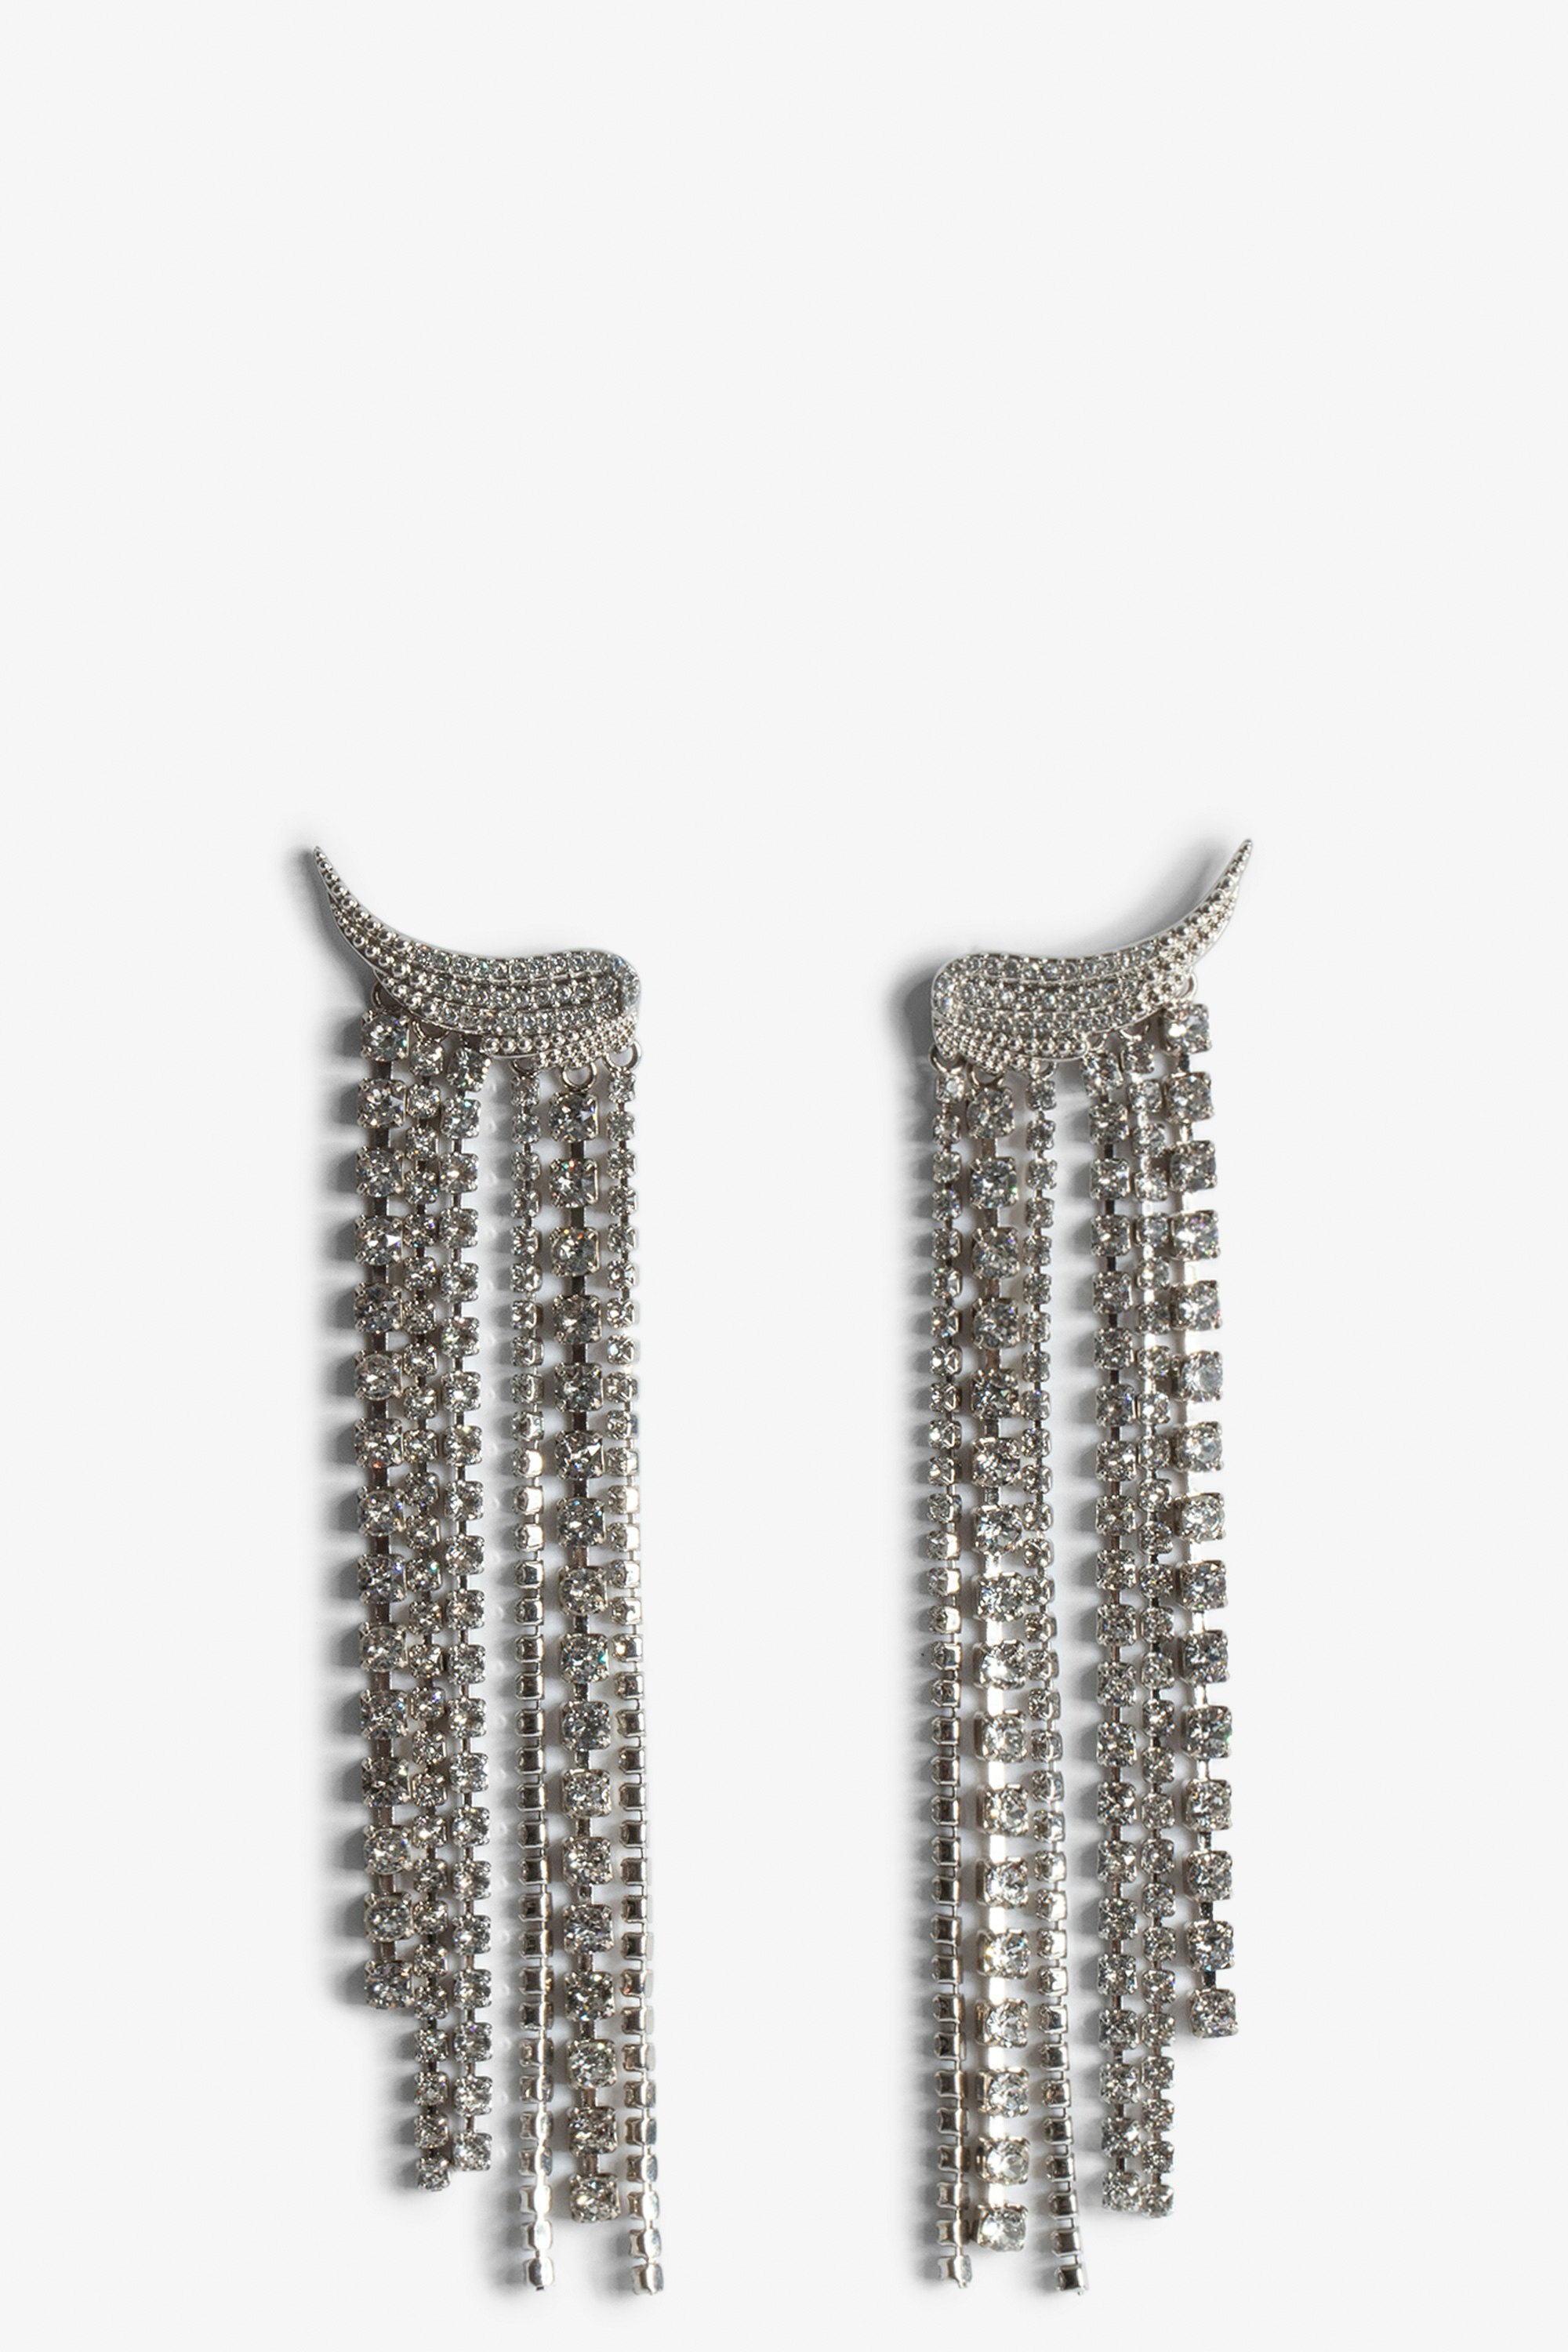 Rock Color Earrings - Silver-tone brass drop earrings with diamanté wings and tassels.